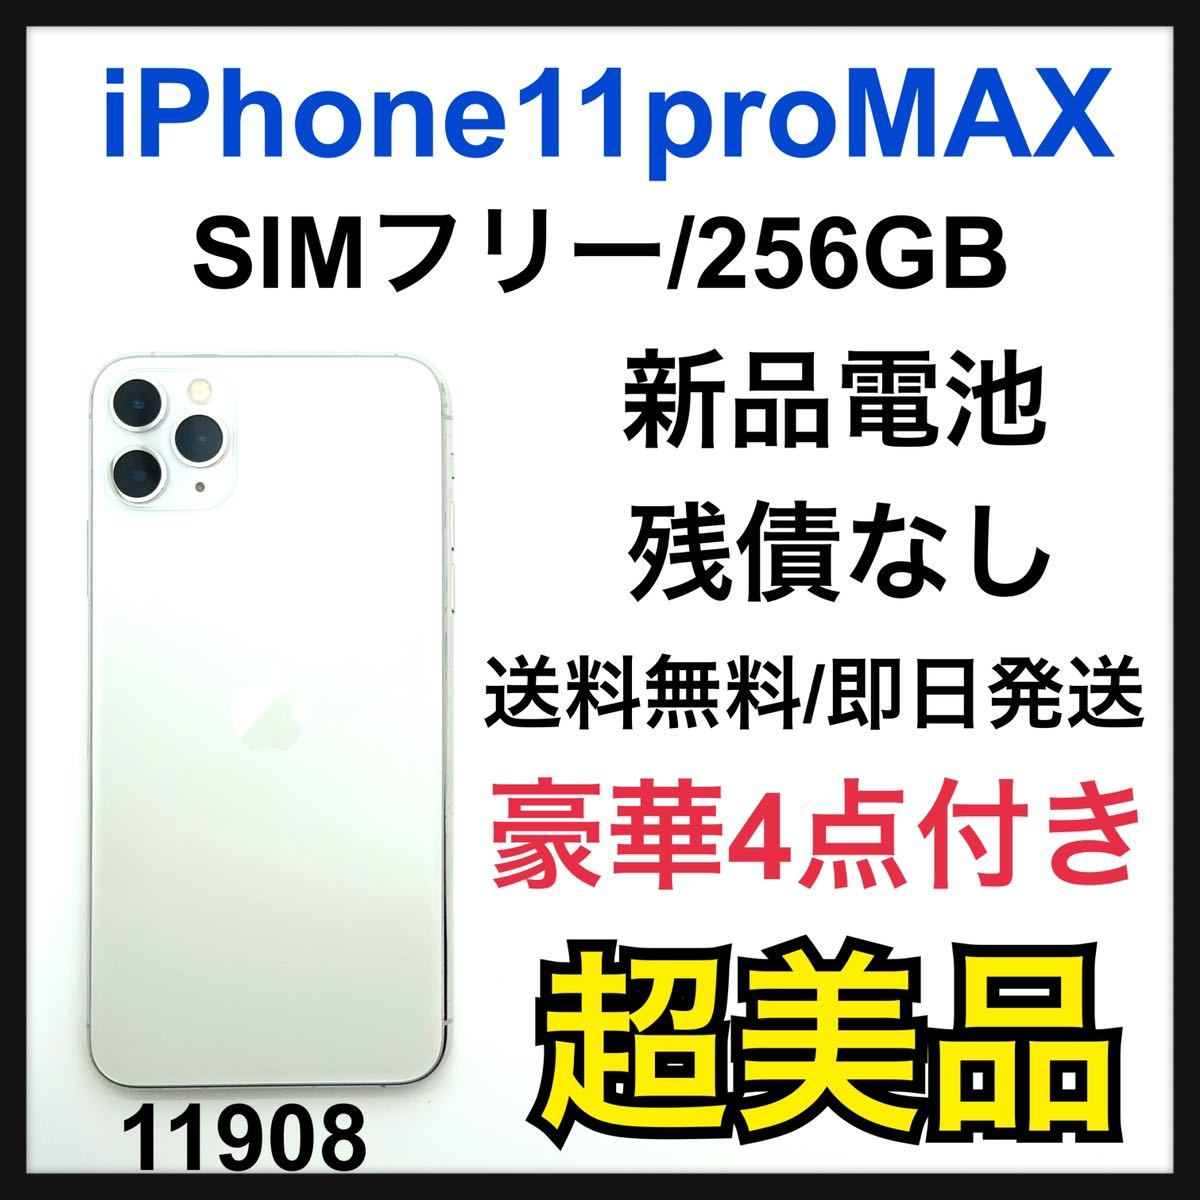 S iPhone 11 Pro Max シルバー 256 GB SIMフリー www.anac-mali.org